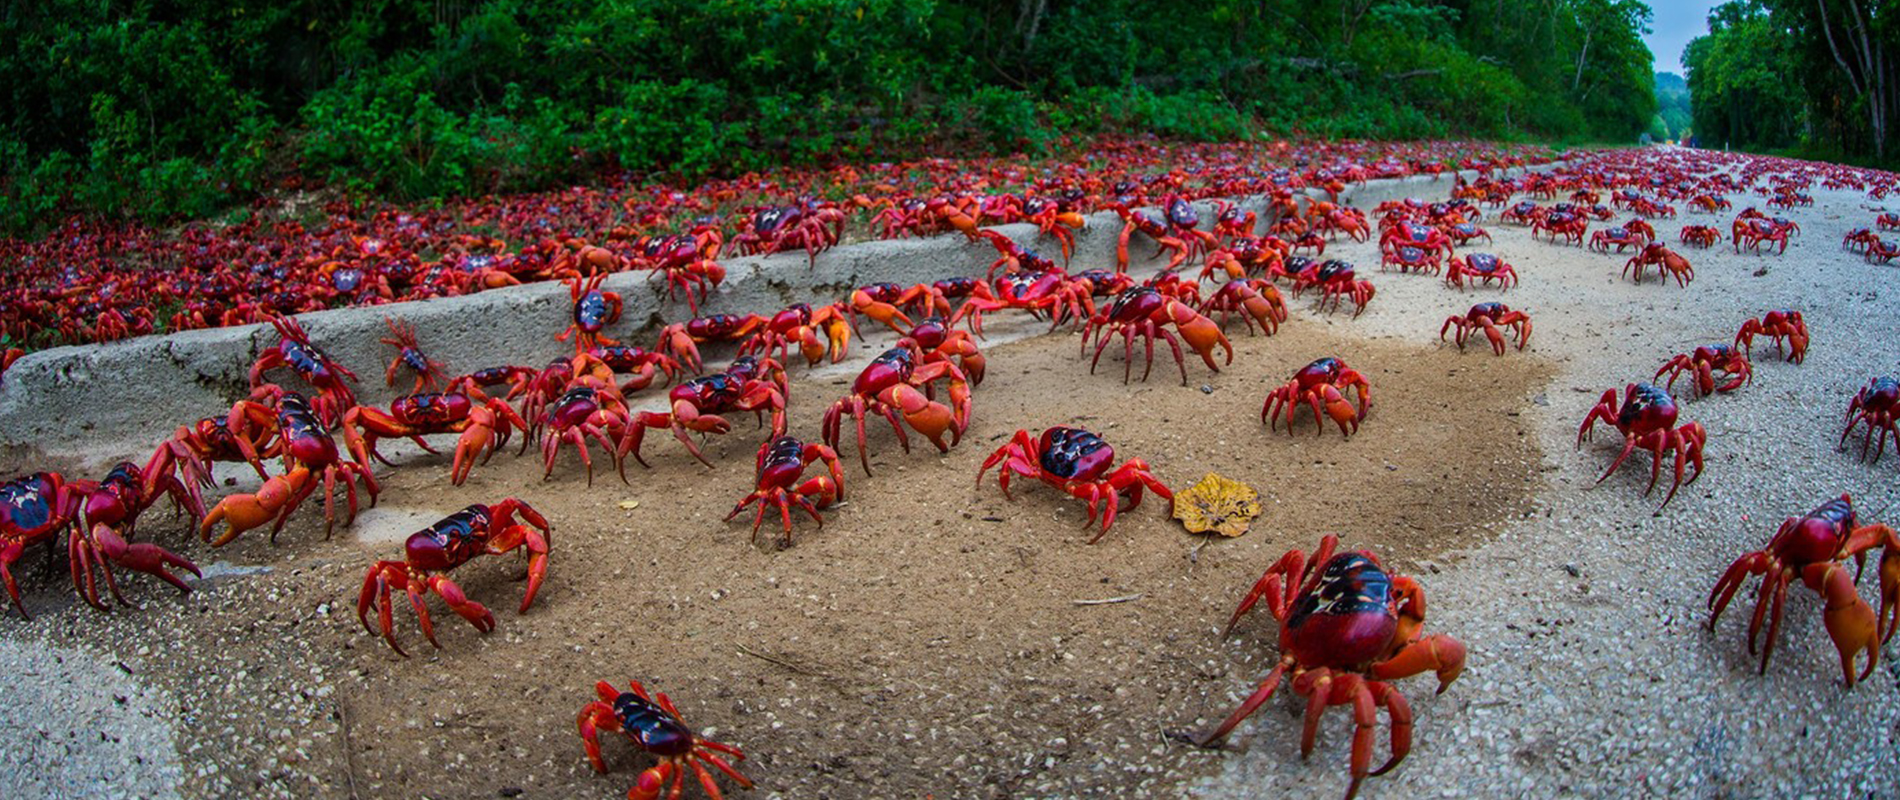 red crabs in Australia